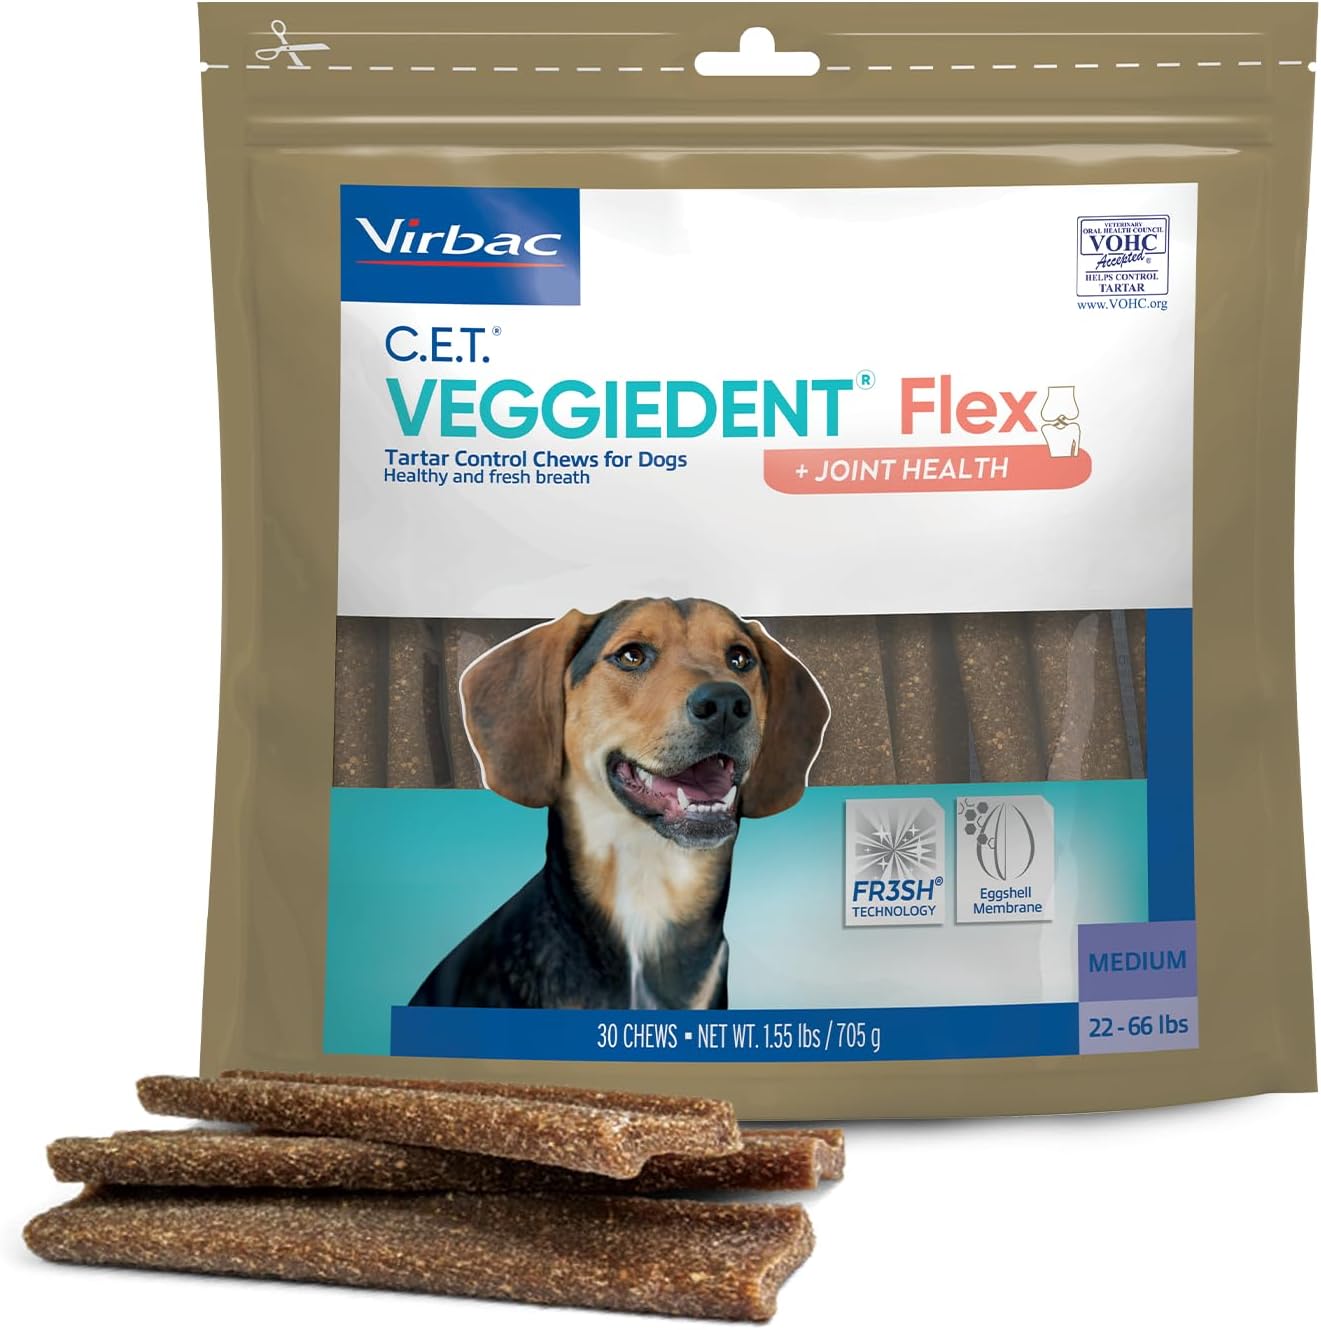 Virbac C.E.T. VEGGIEDENT Flex Tartar Control Chews for Dogs - Medium